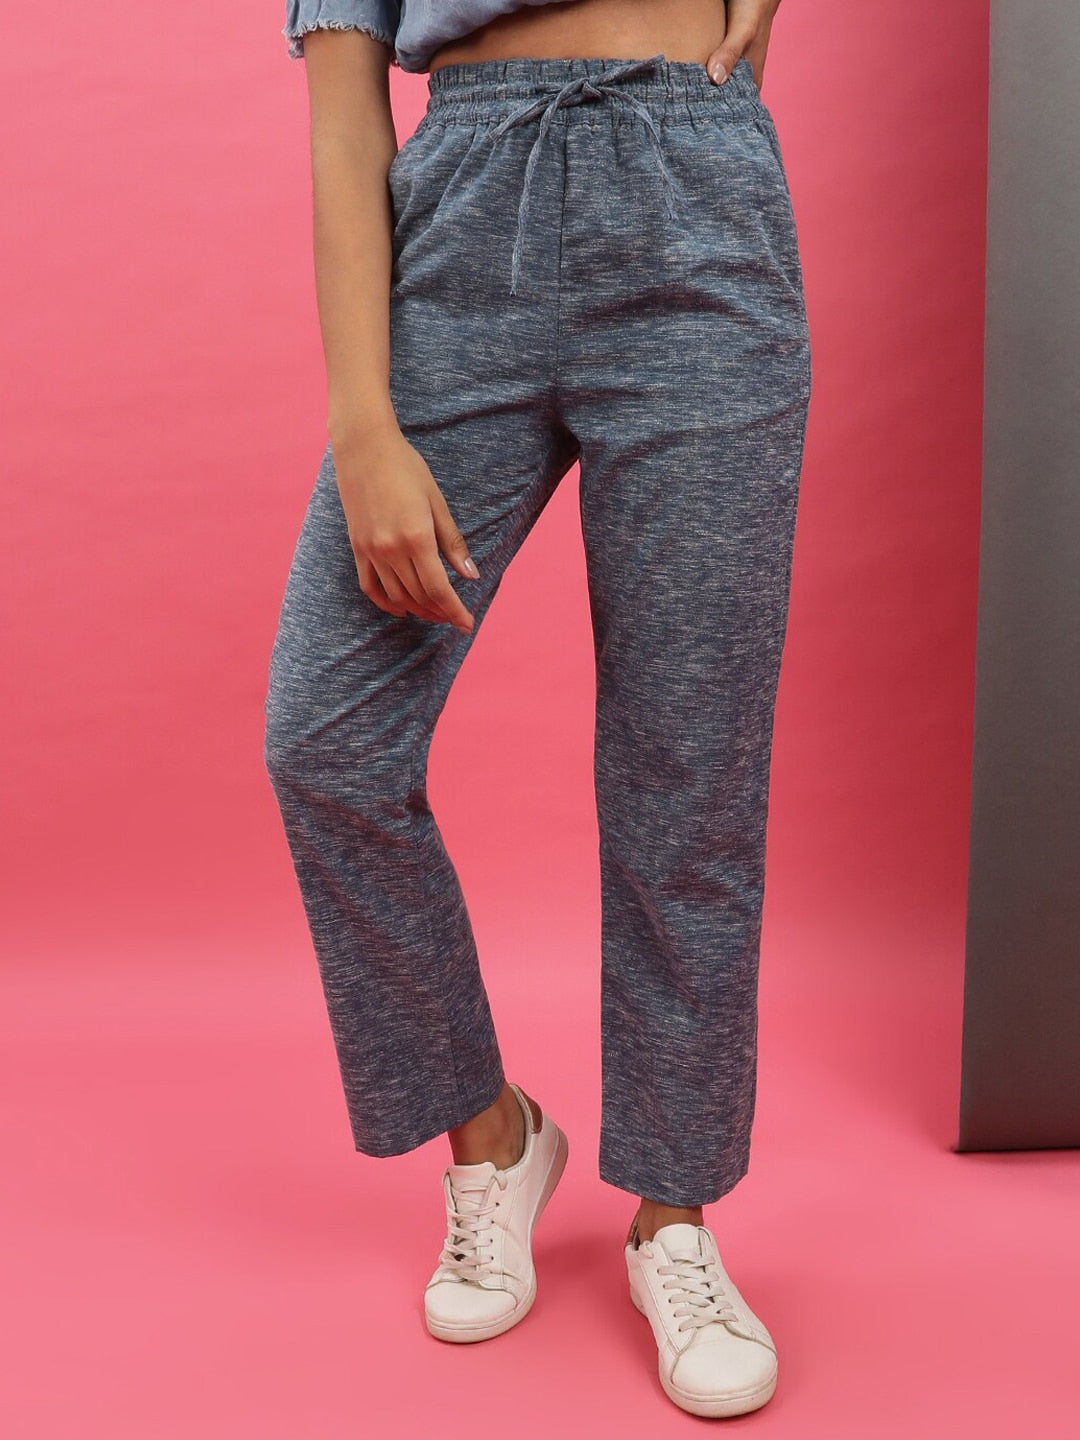 Shop Women Elasticated Trousers Online.